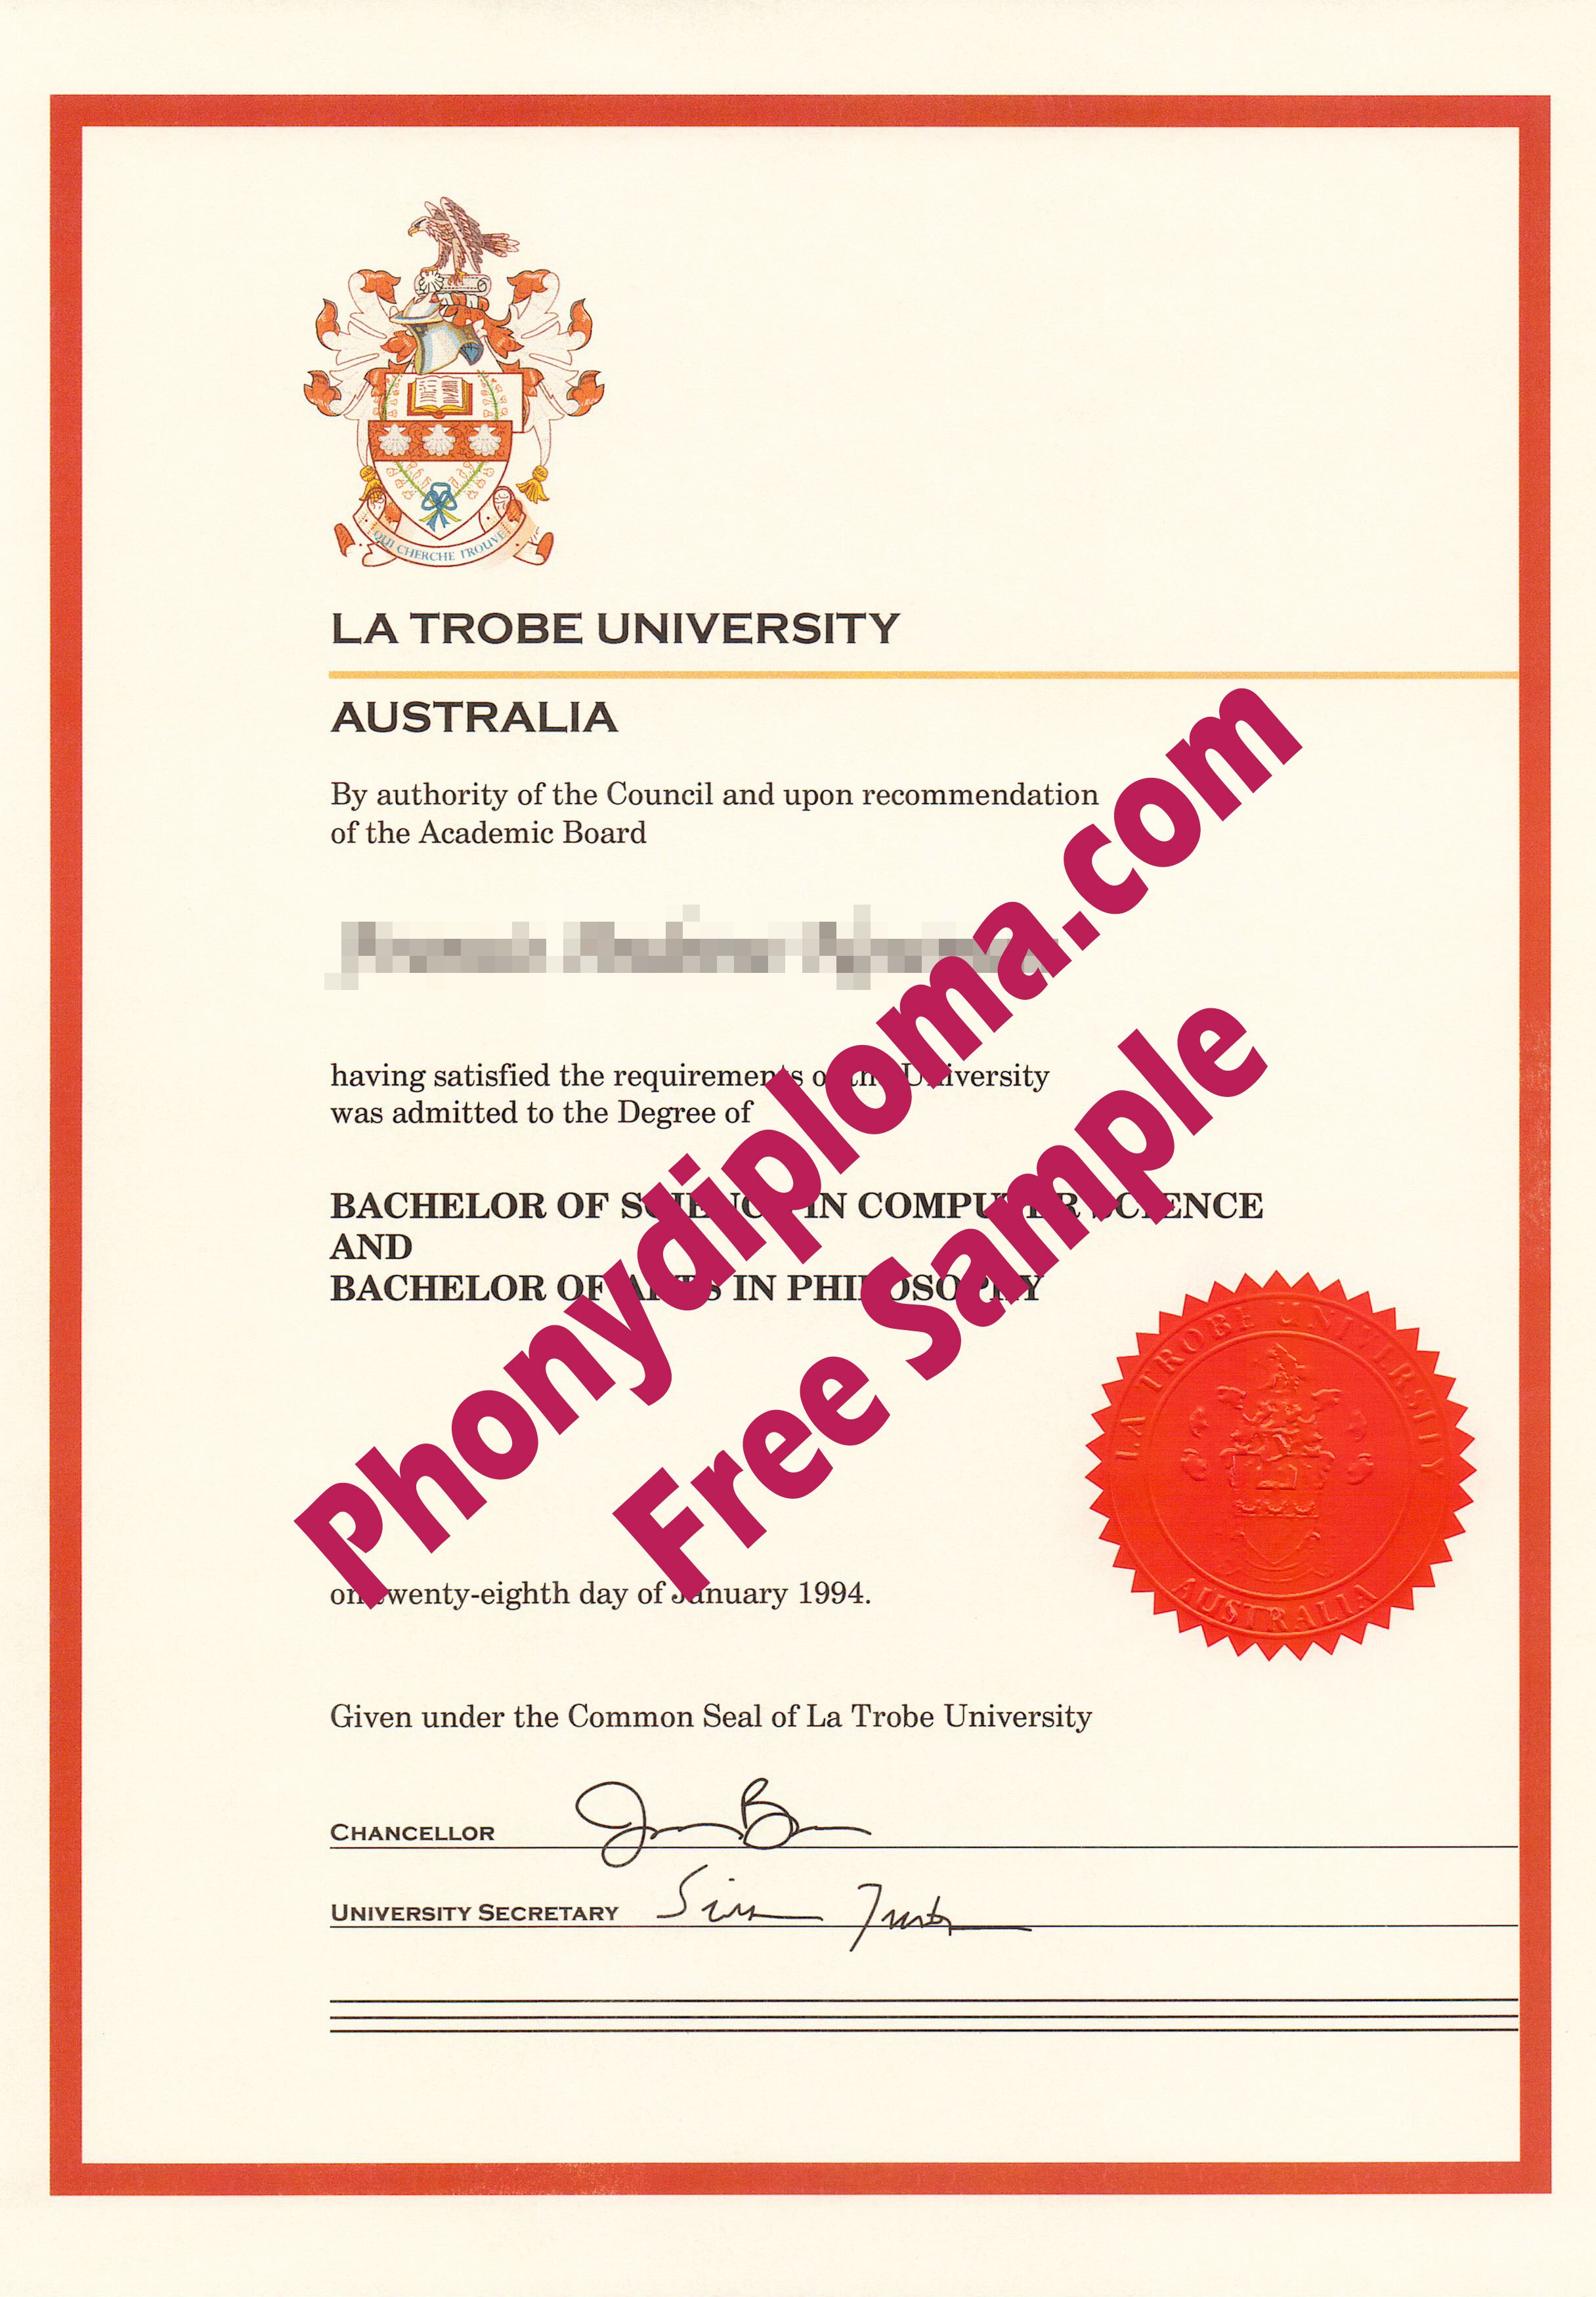 La Trobe University Latrobe Australia Free Sample From Phonydiploma